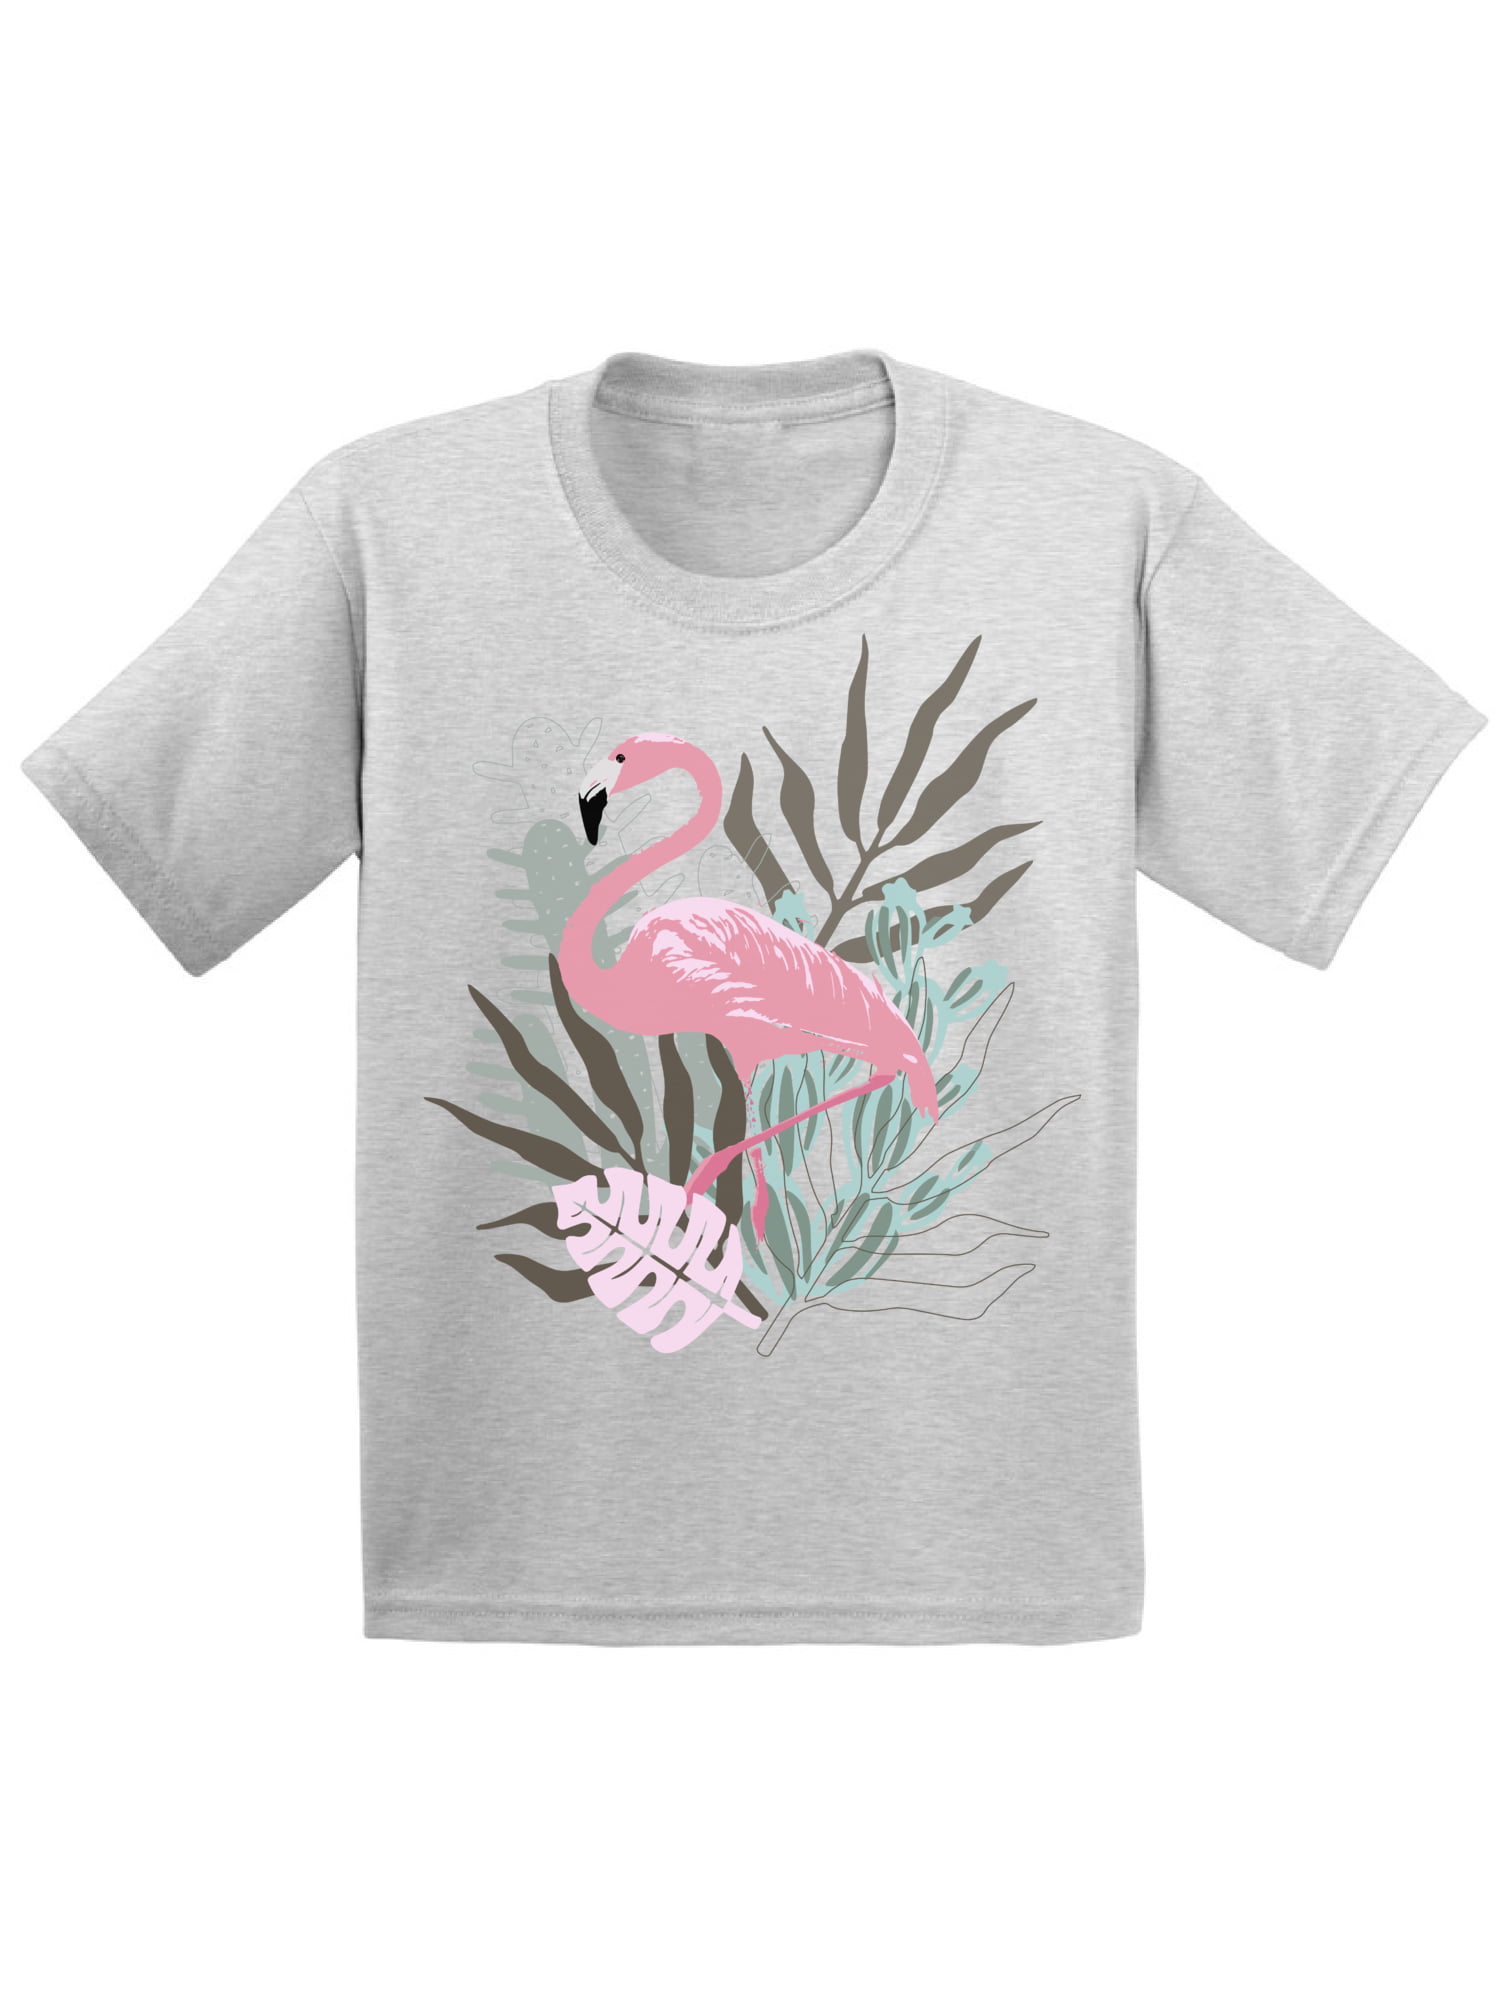 Awkward Styles - Awkward Styles Floral Flamingo Youth Shirt Cute Summer ...